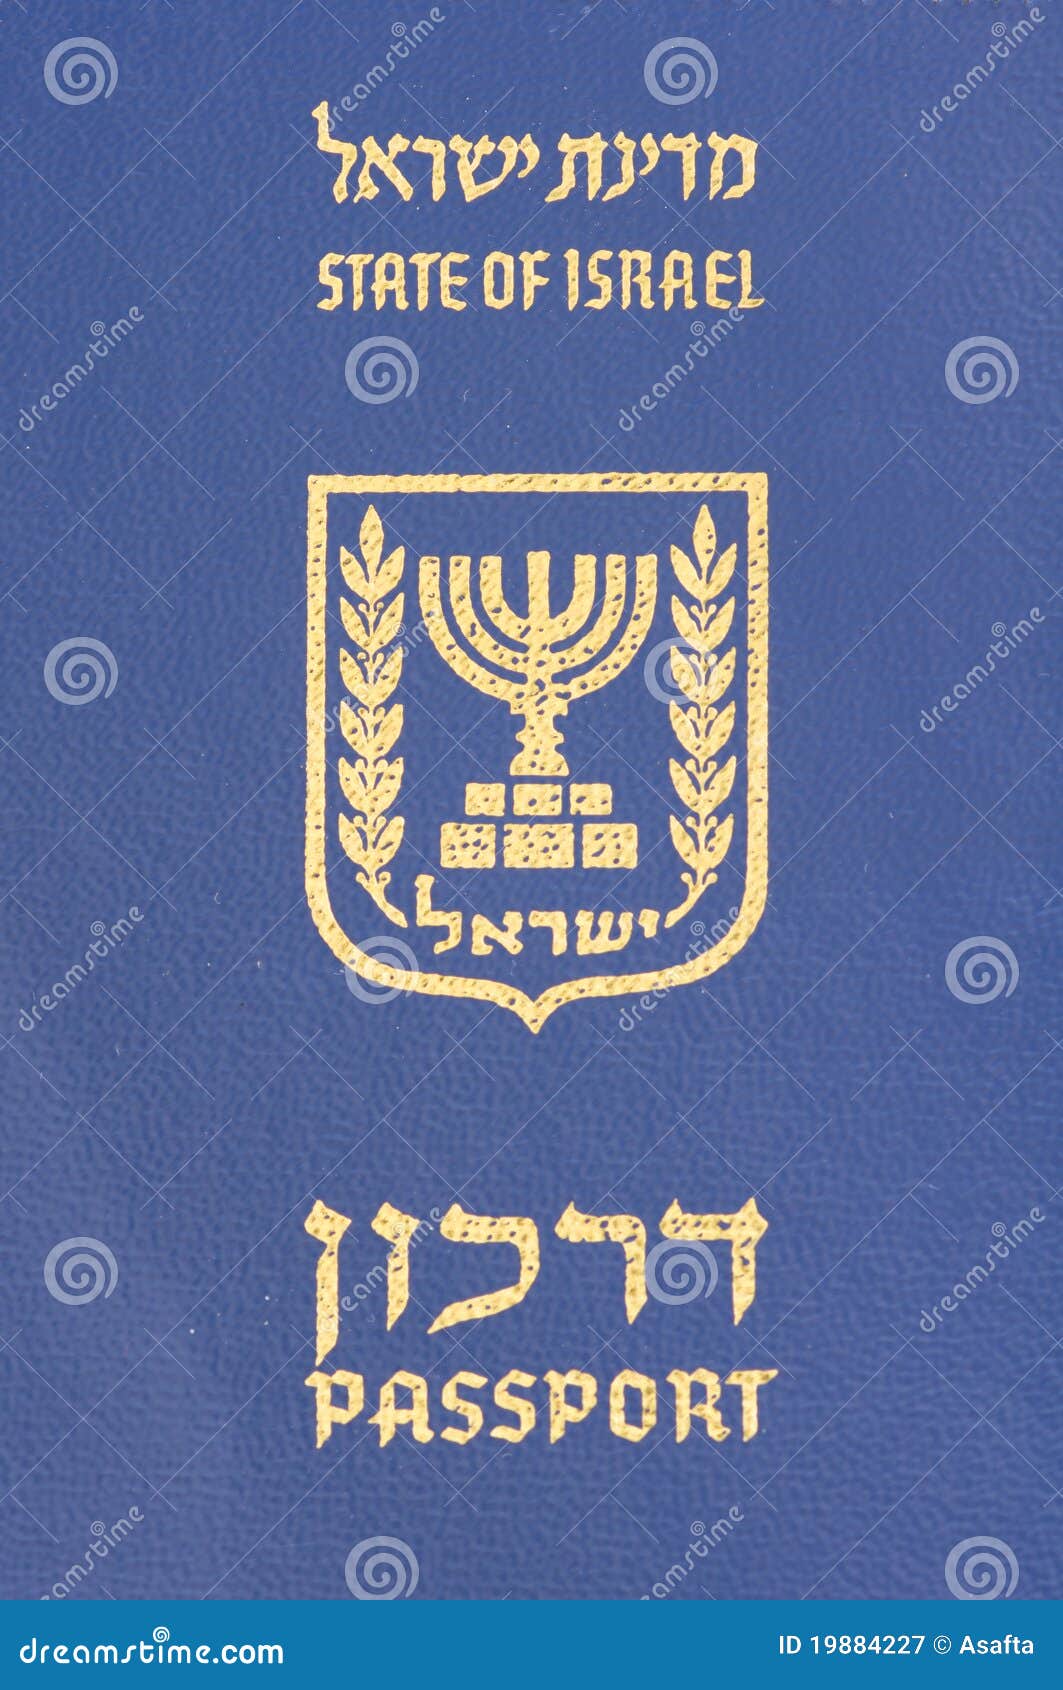 israeli passport